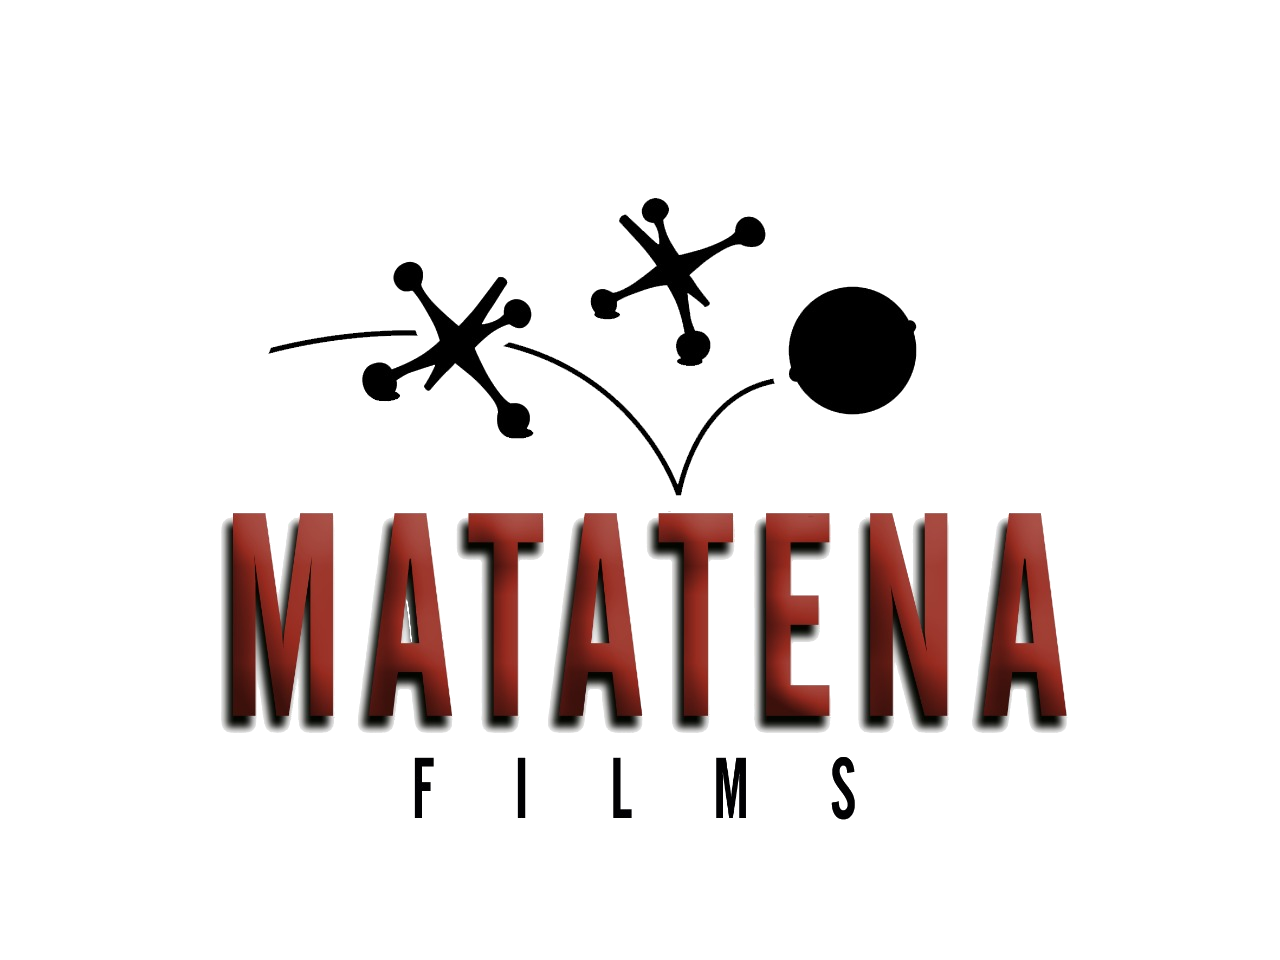 Matatena Films